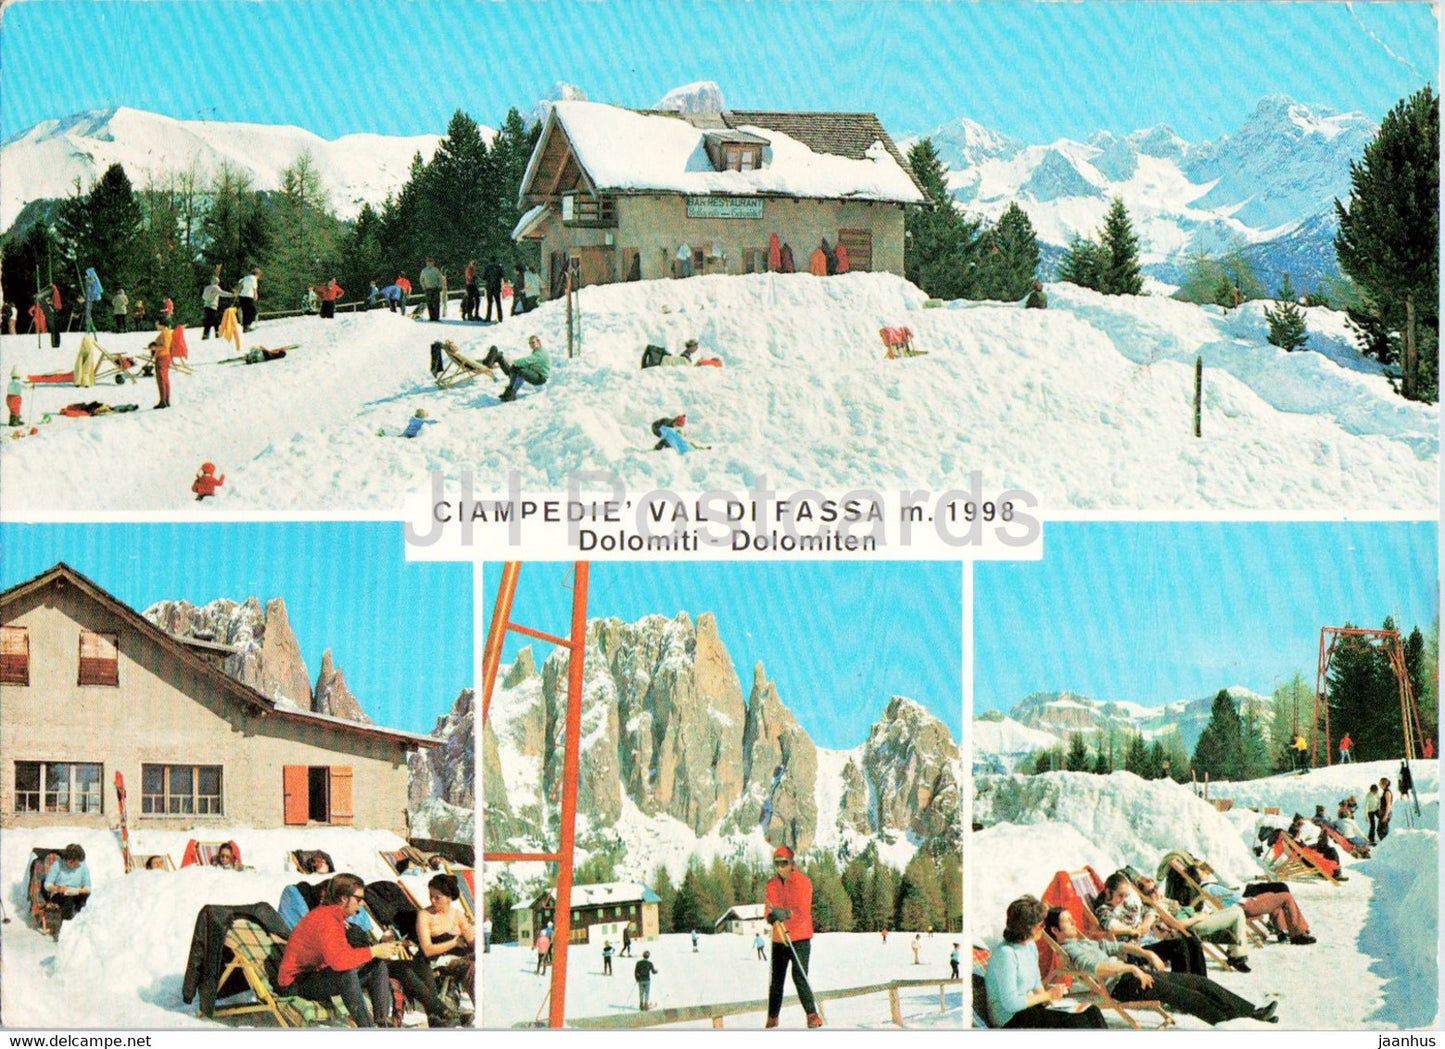 Ciampedie - Val di Fassa 1998 m - Dolomiti - 1975 - Italy - used - JH Postcards